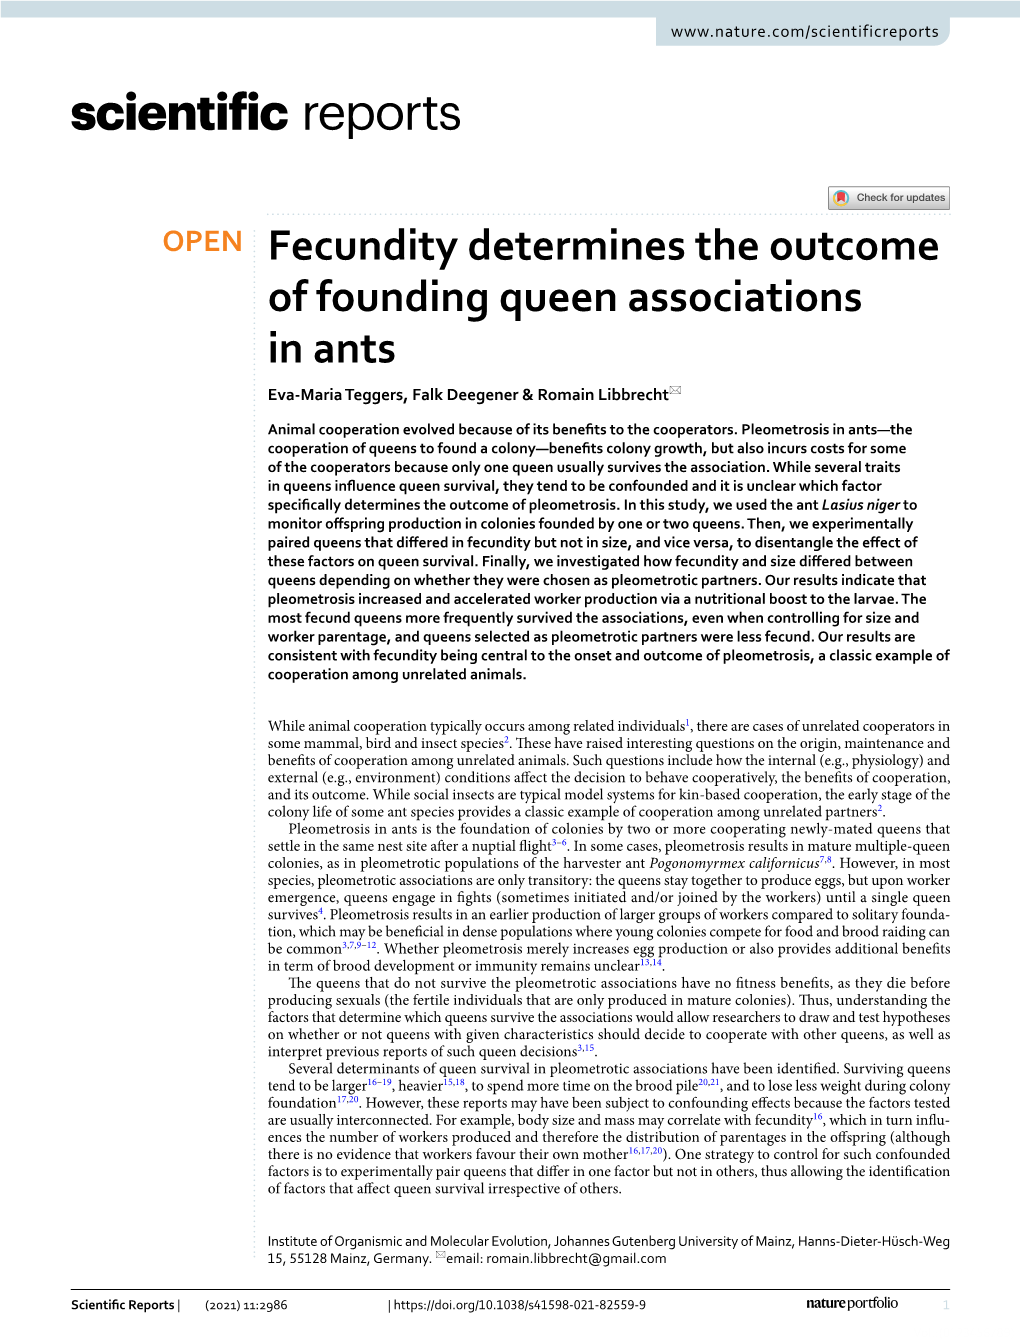 Fecundity Determines the Outcome of Founding Queen Associations in Ants Eva‑Maria Teggers, Falk Deegener & Romain Libbrecht*